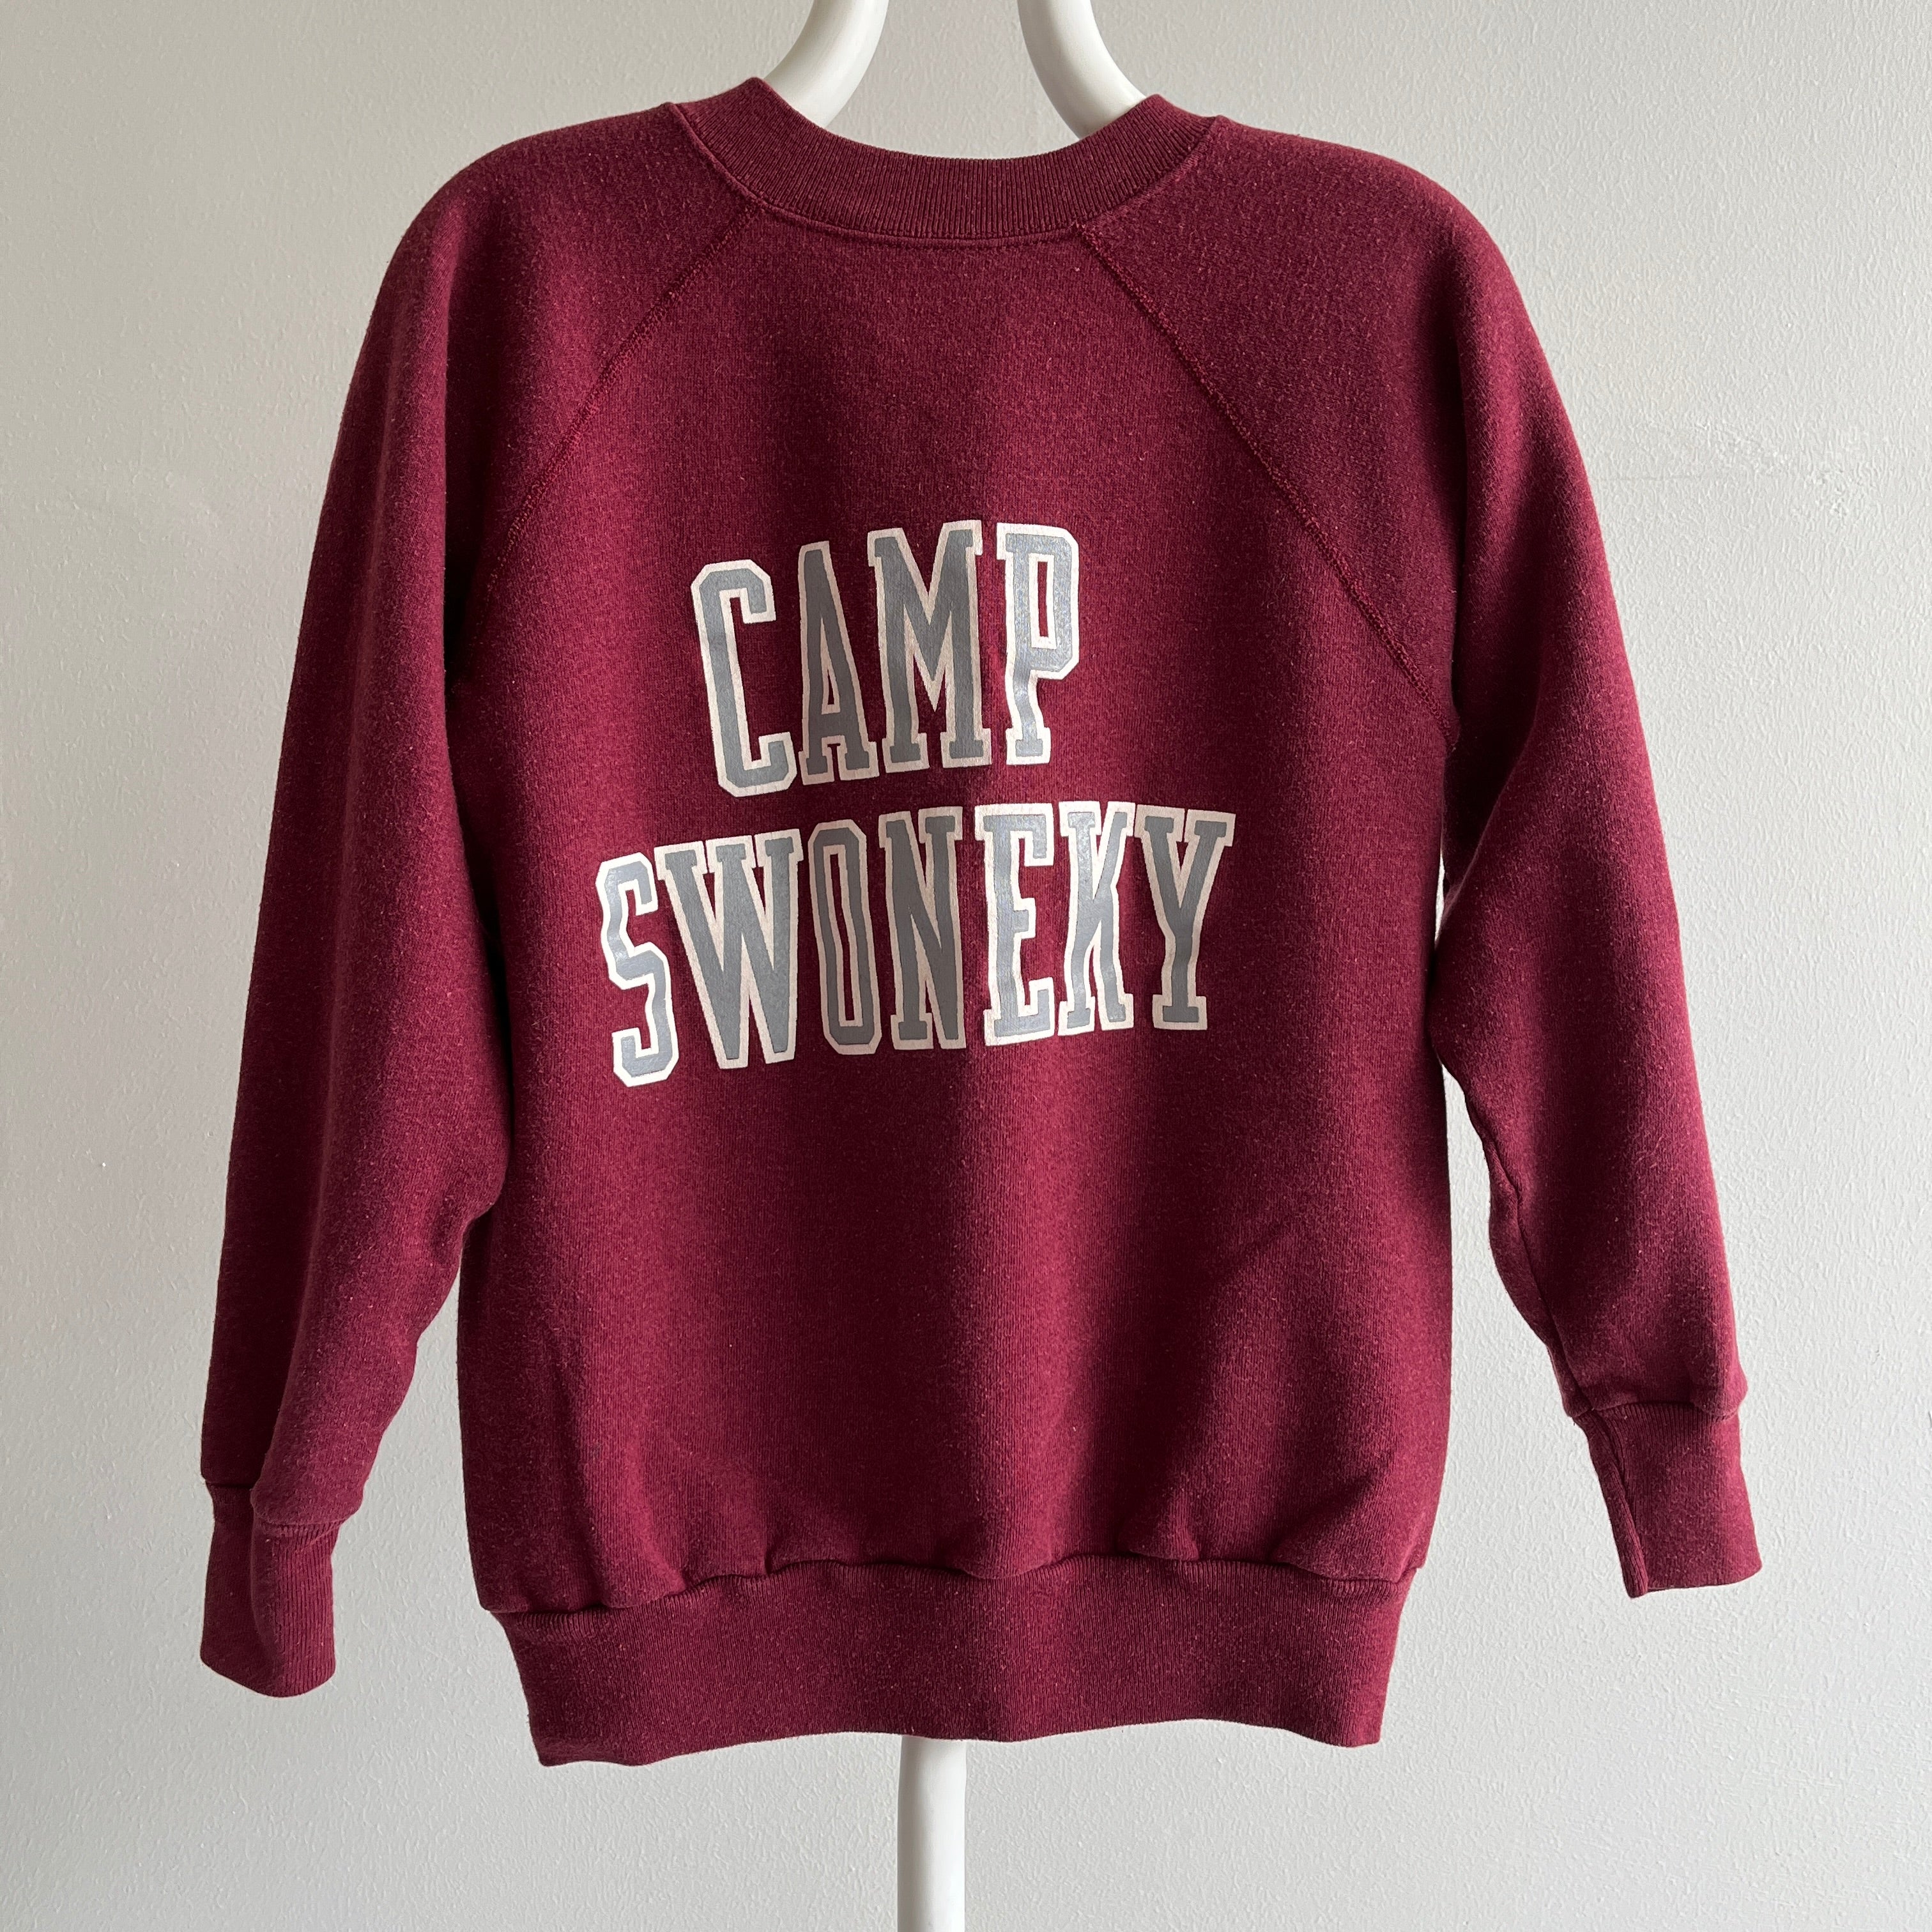 1980s Camp Swoneky Raglan Soft and Cozy Sweatshirt